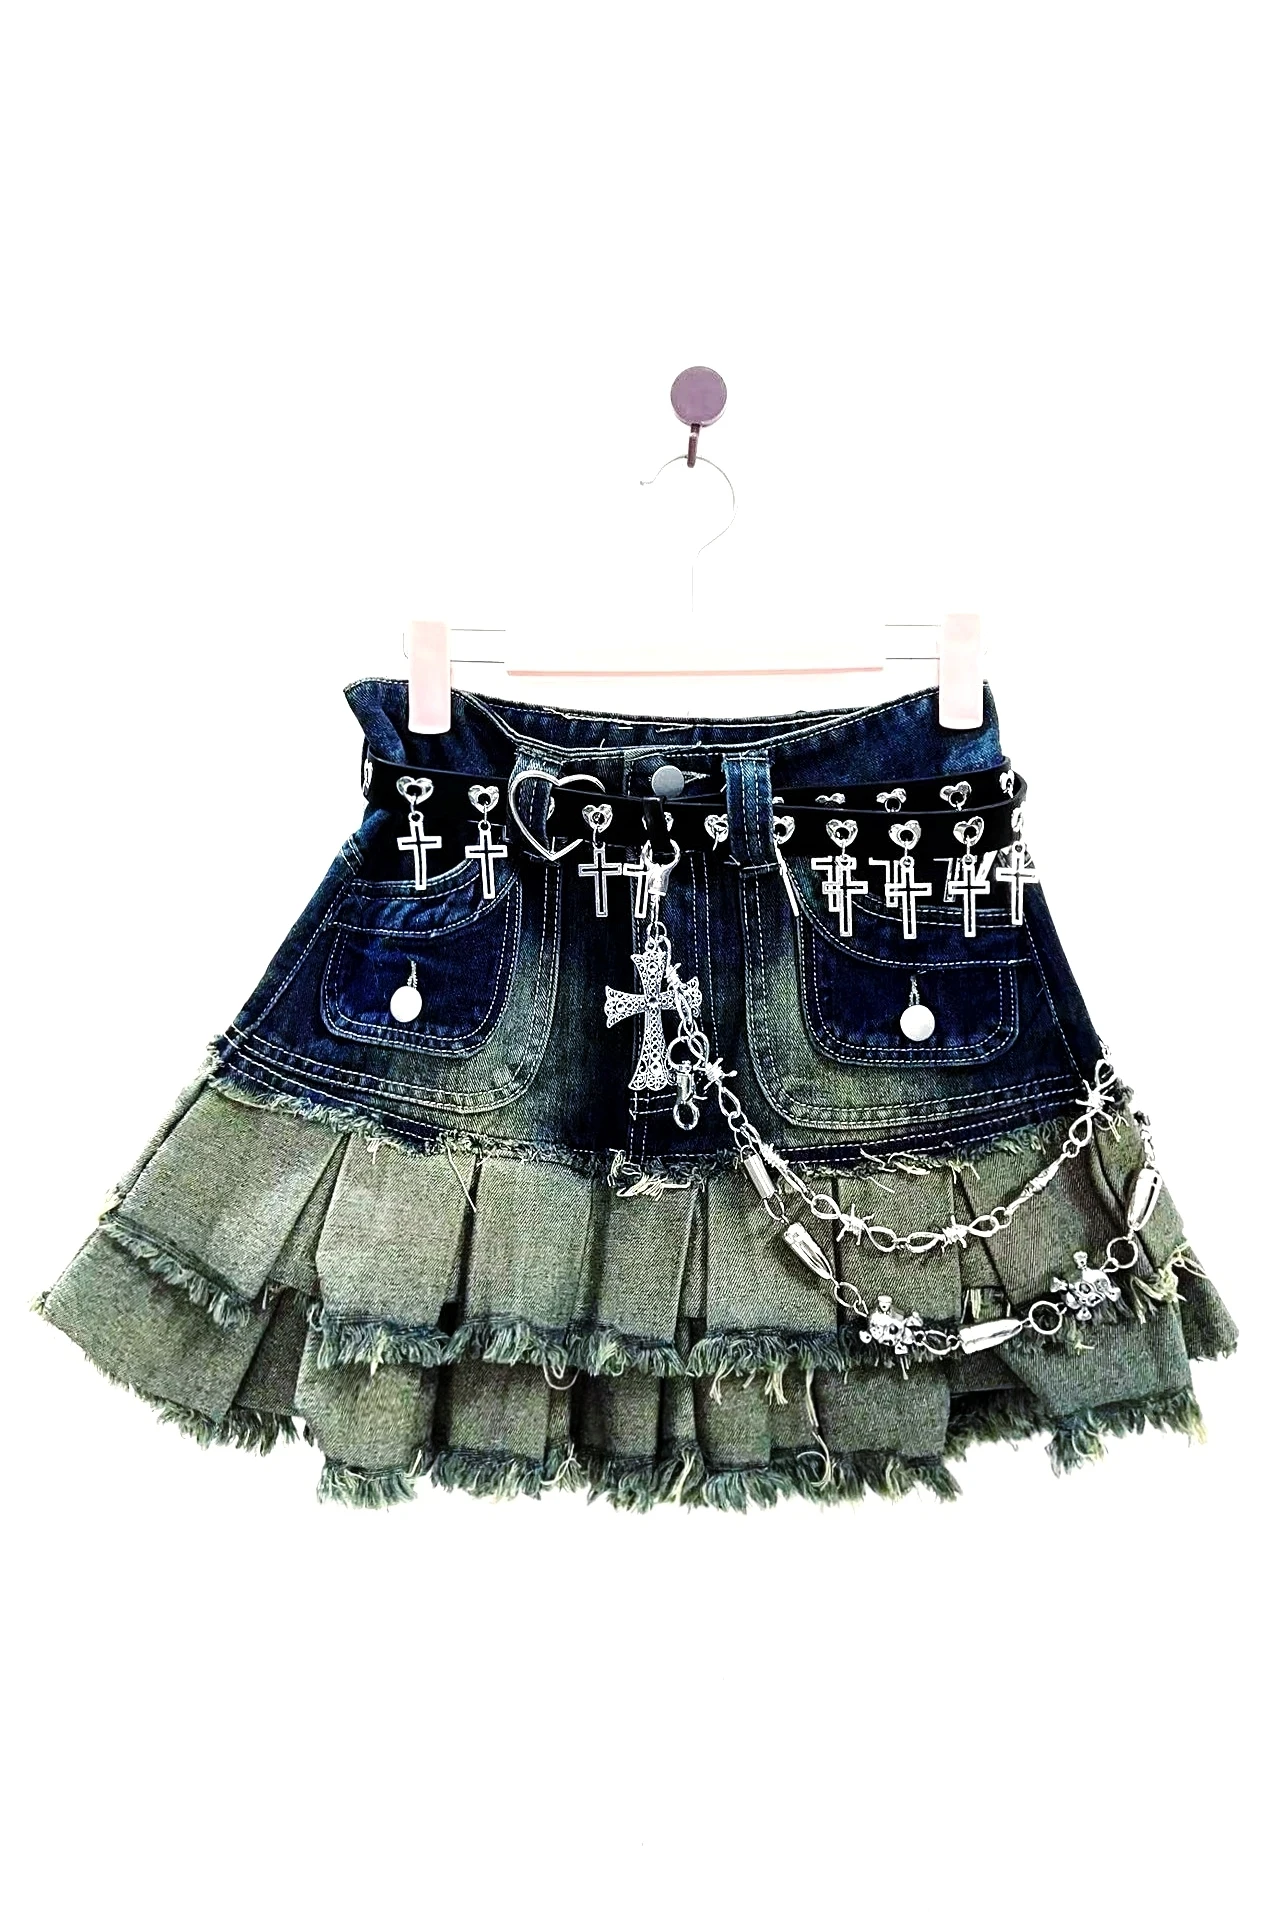 Original Subculture Y2k Clothes American Retro Denim Short Skirt Double Layer Ruffles Pleated Mini Skirt Punk Rock Grunge Skirts